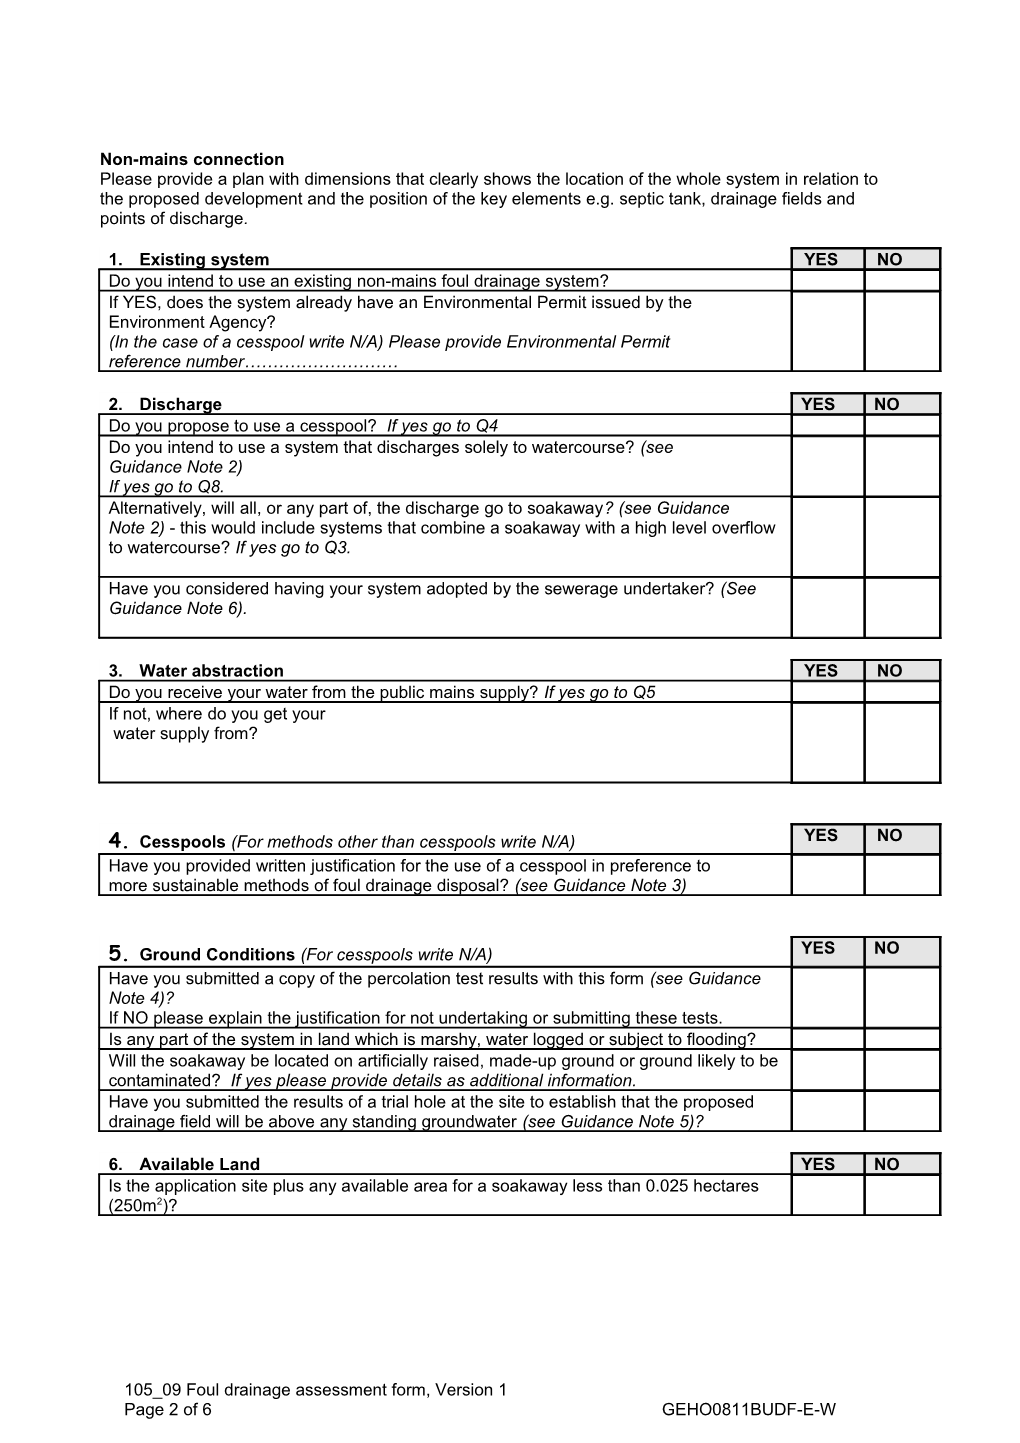 105 09 Foul Drainage Assessment Form (FDA1)